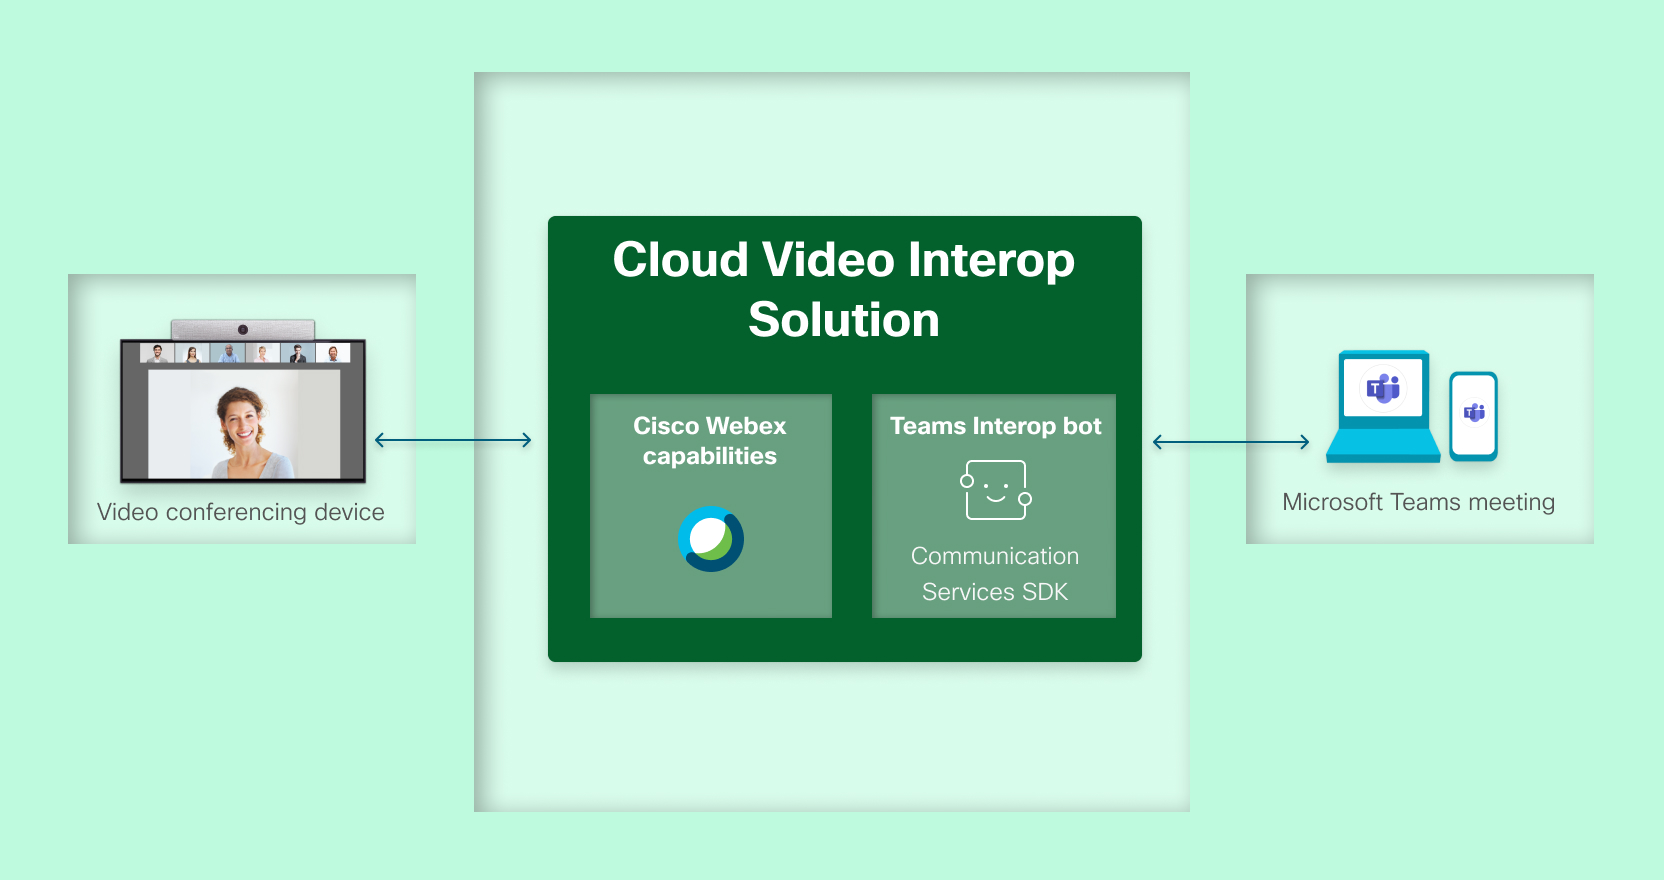 Immagine architettura CVI basata su https://docs.microsoft.com/en-us/microsoftteams/cloud-video-interop